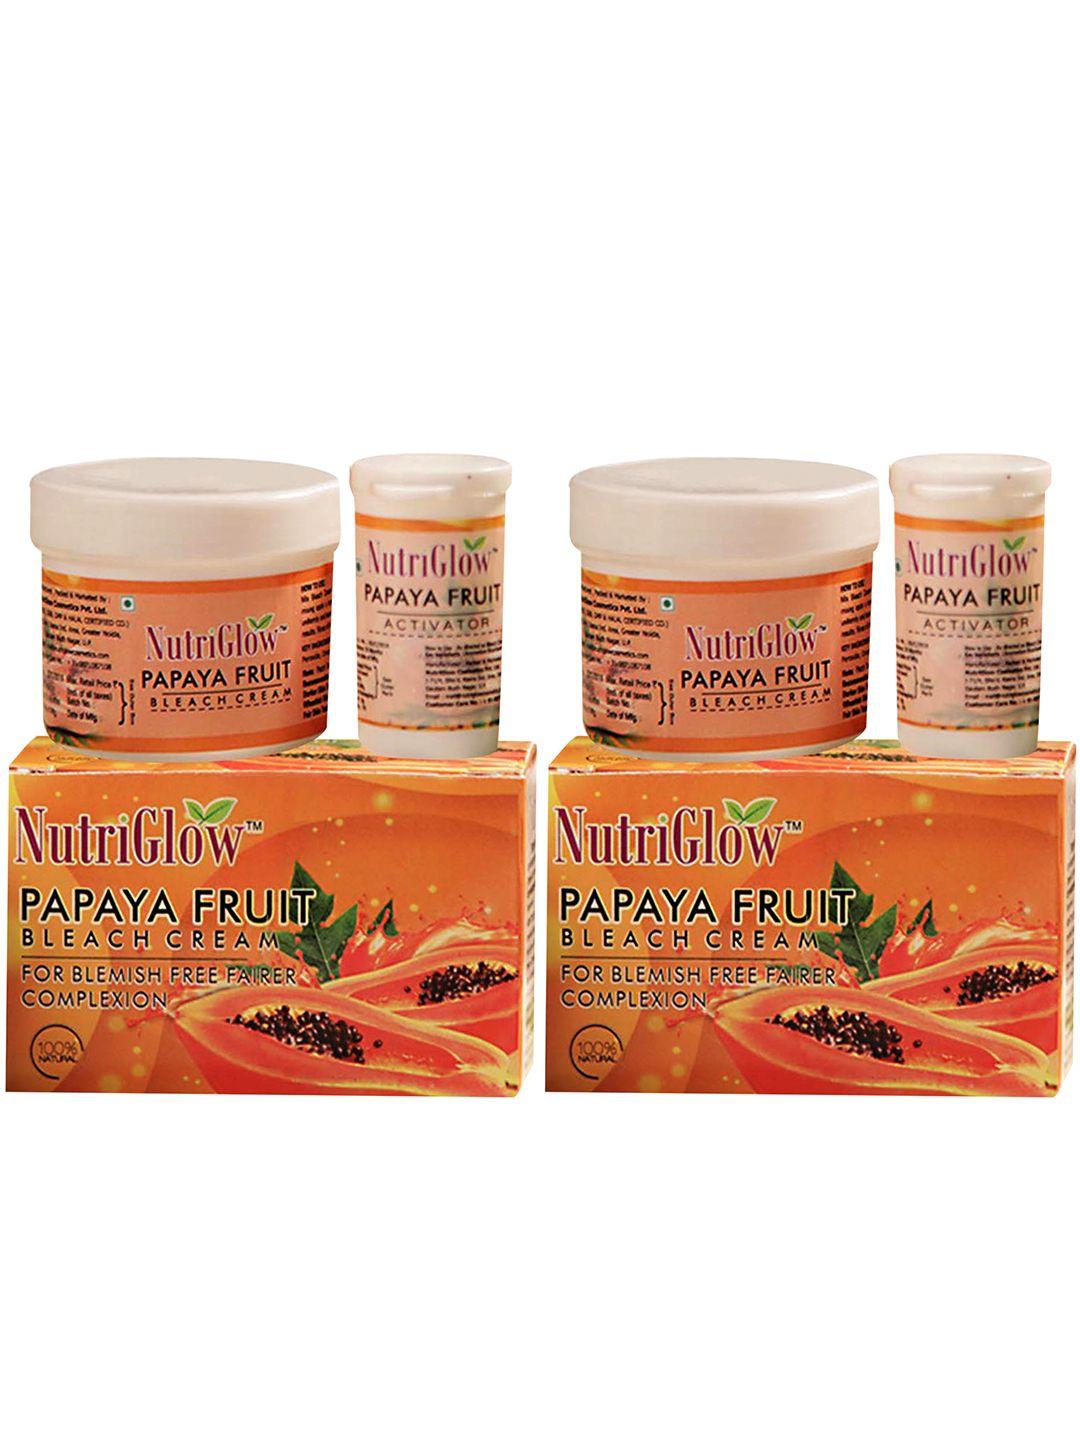 nutriglow pack of 2 sustainable papaya fruit bleach cream 86g